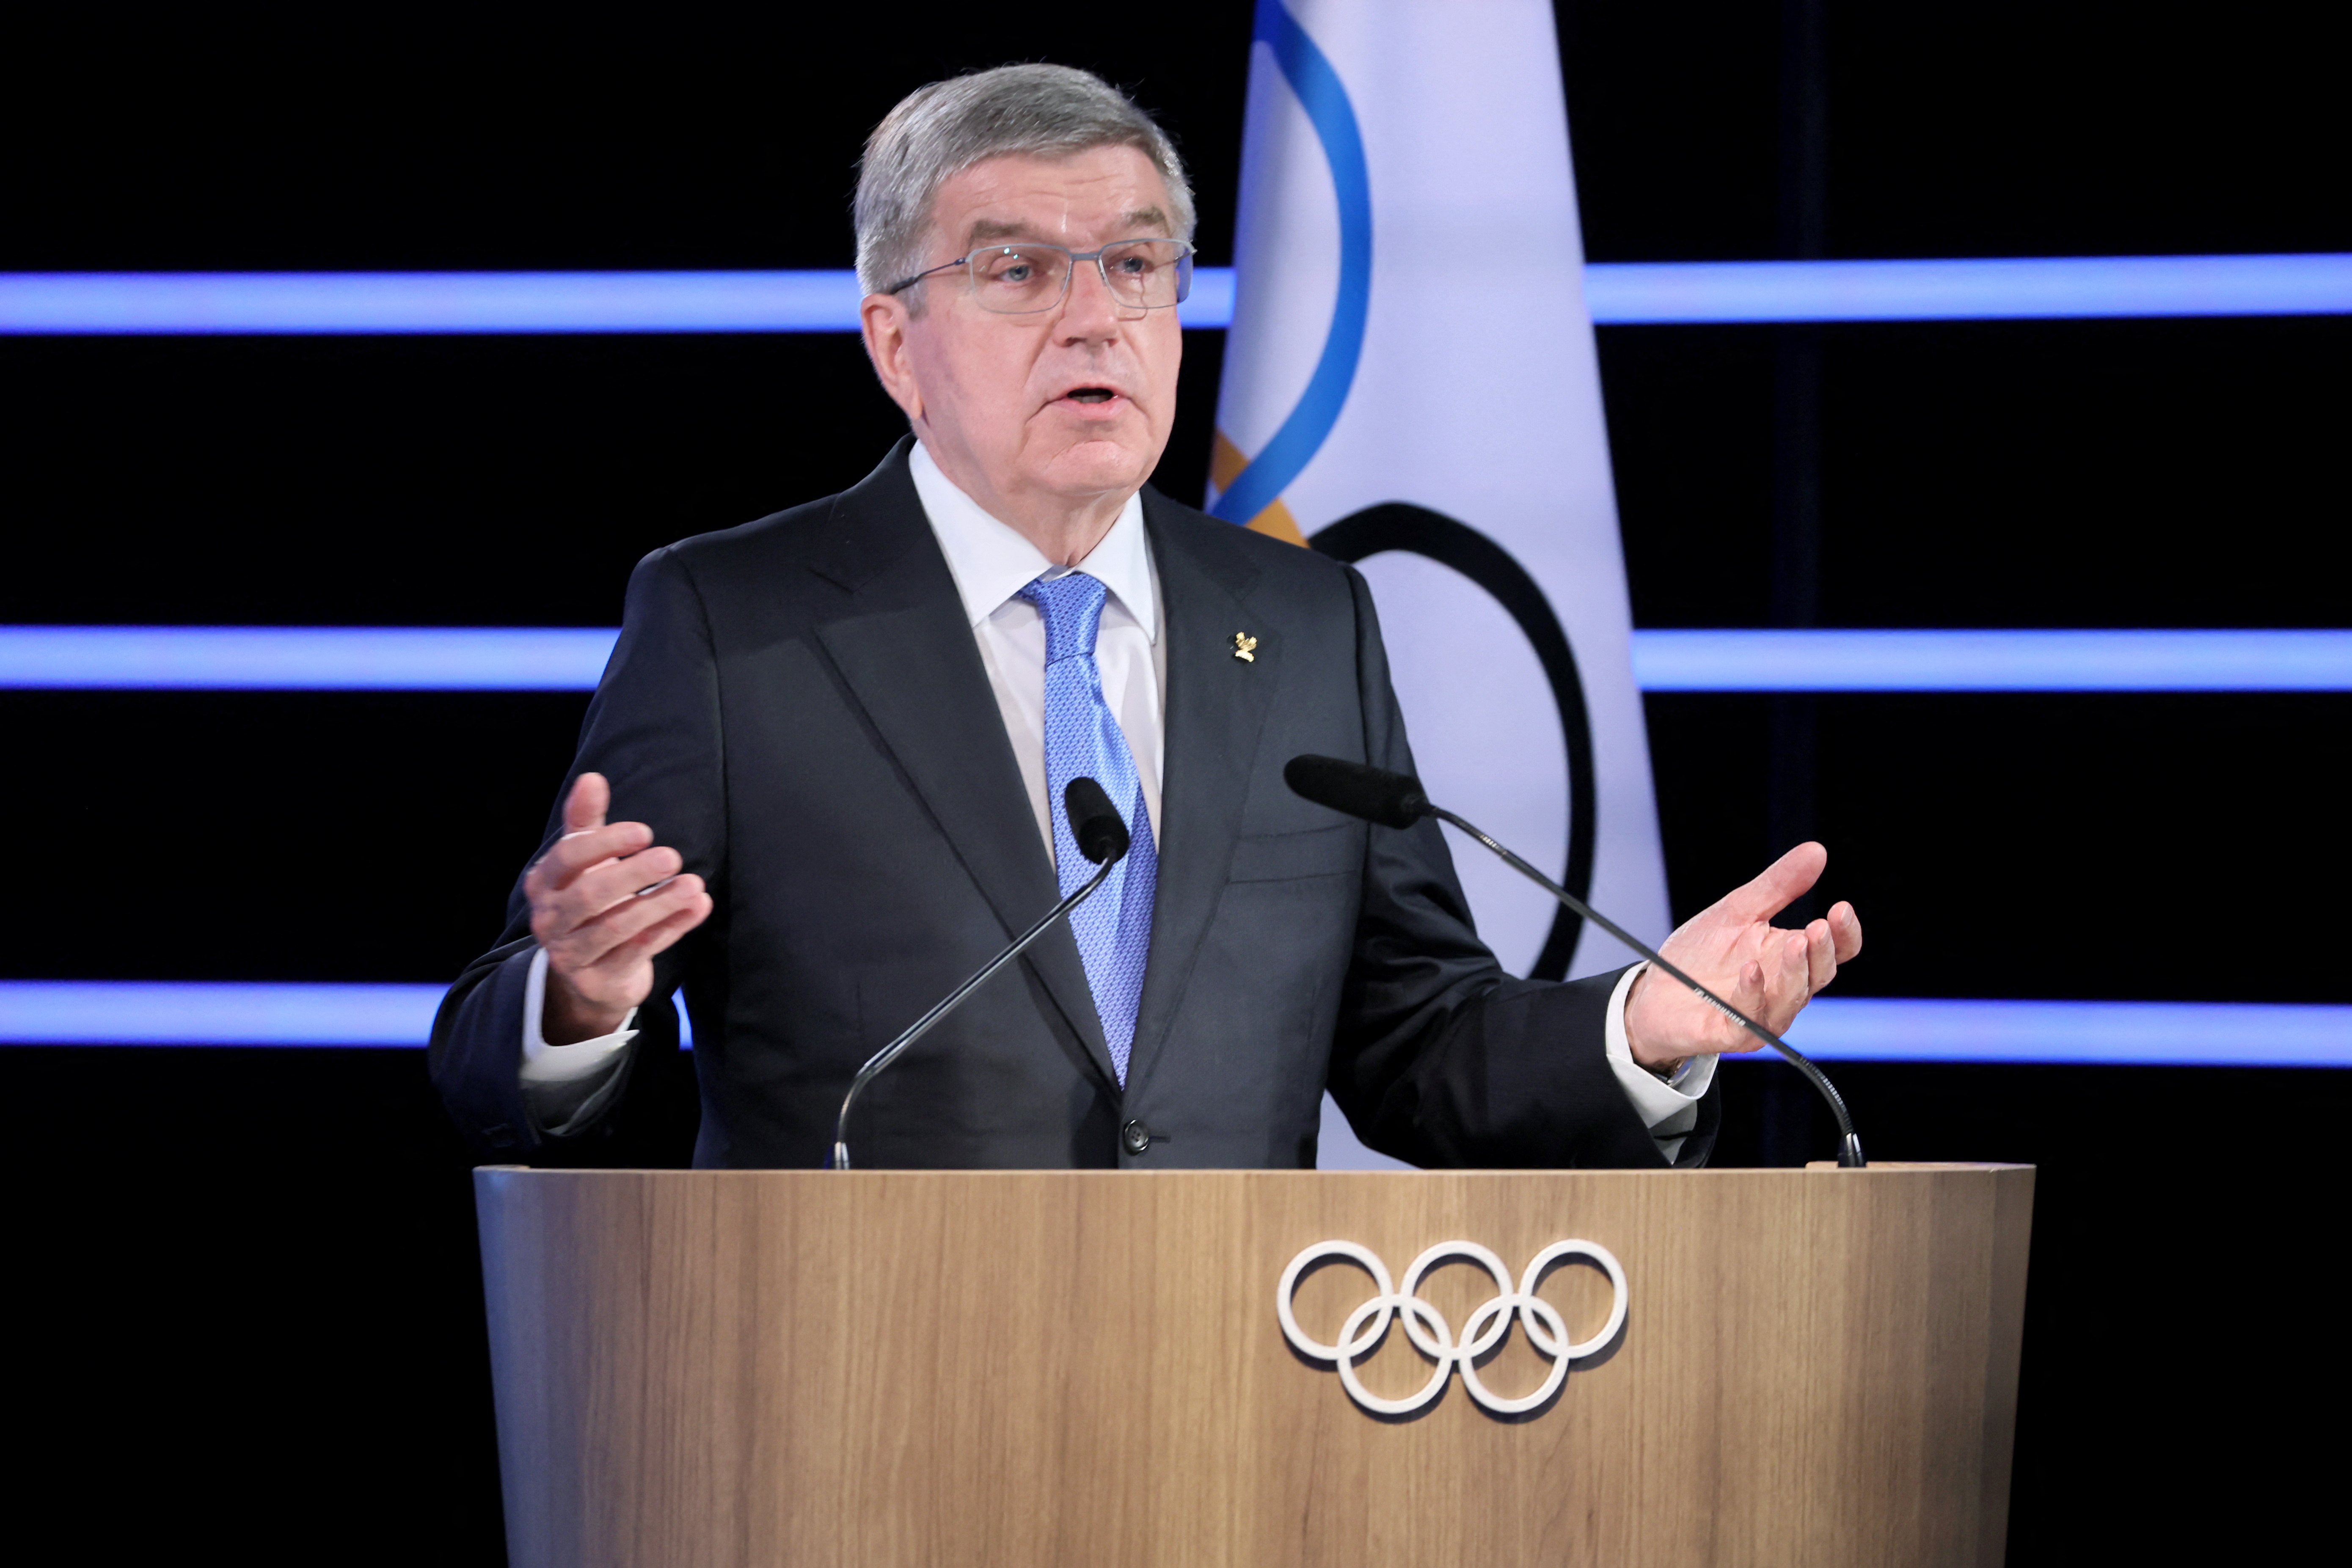 IOC President Bach addressed FINA in Budapest at the World Aquatics Championships